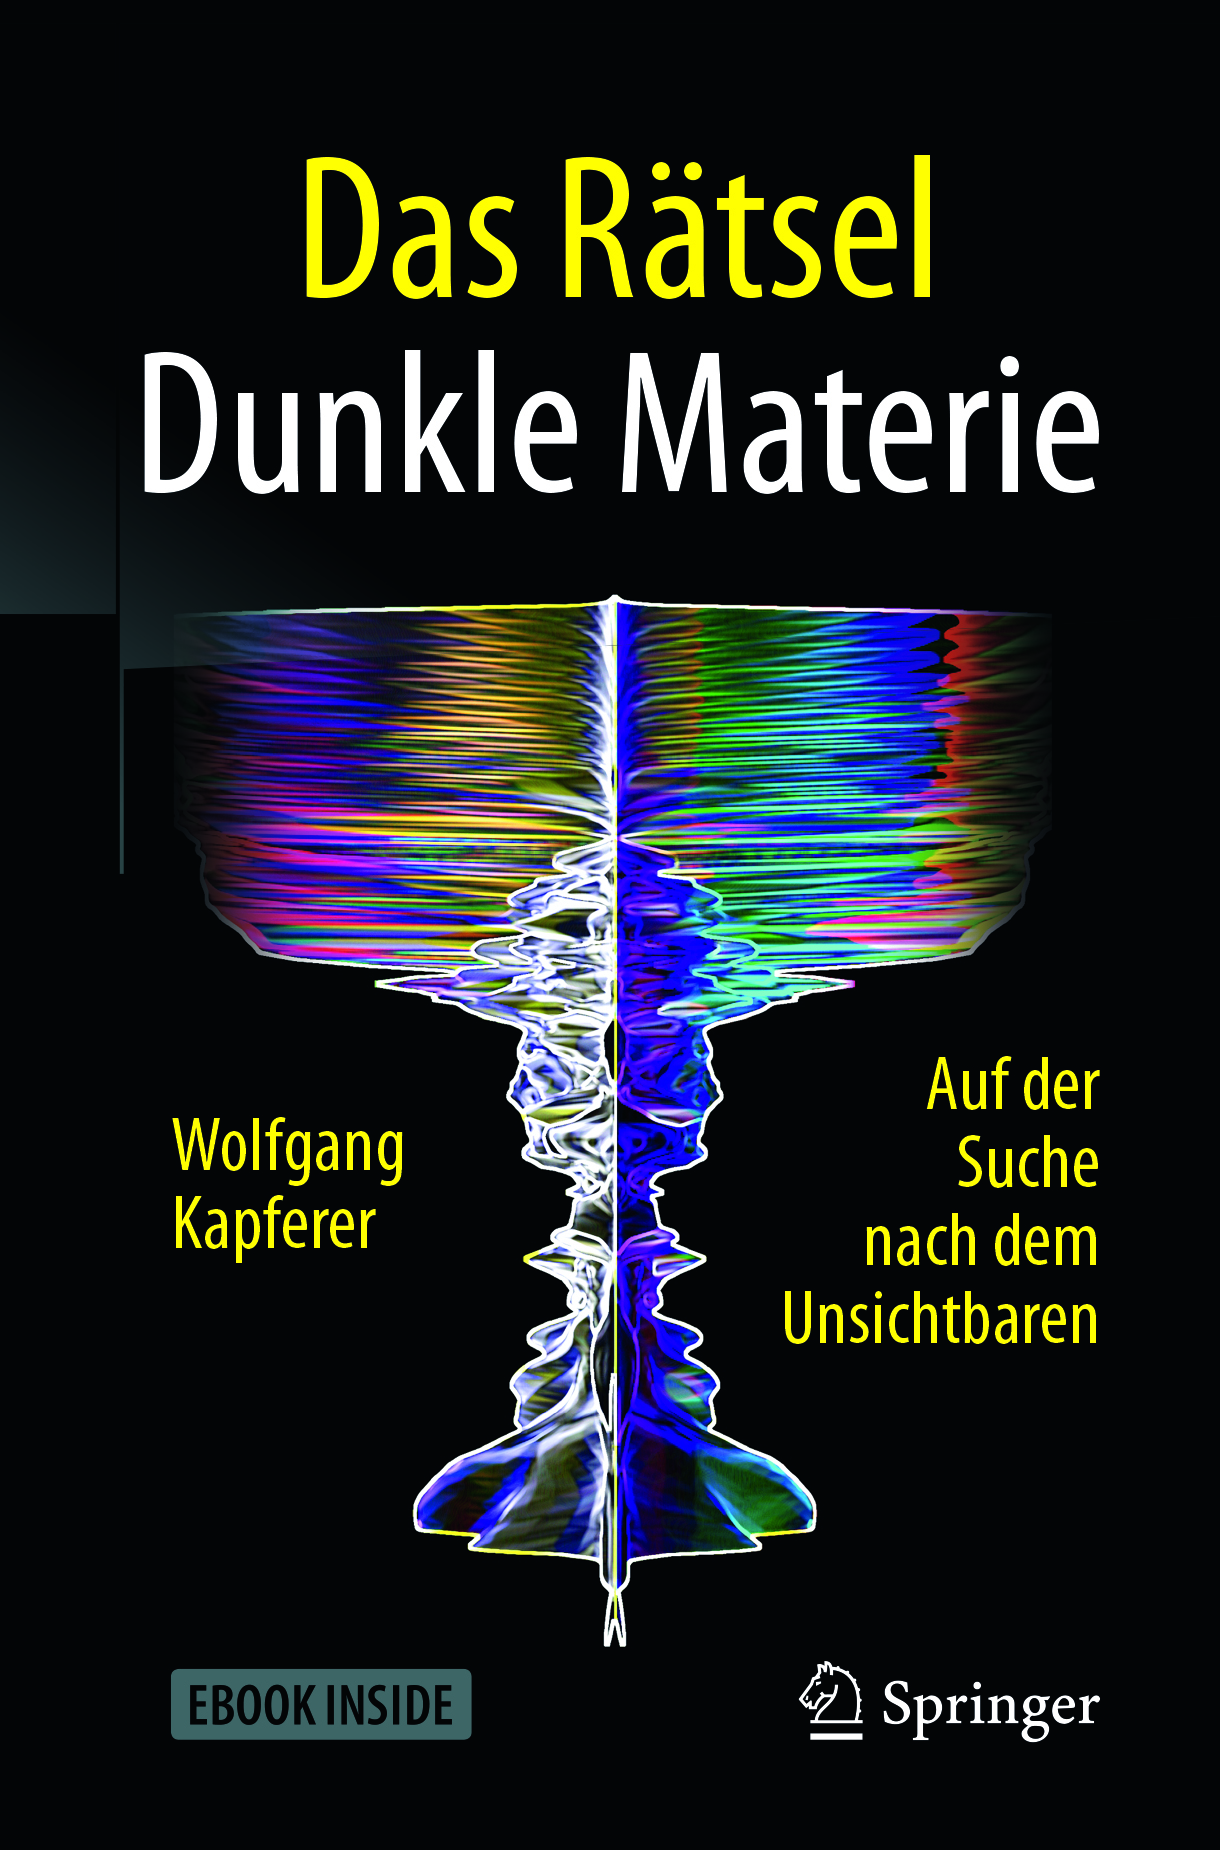 Das Rätsel Dunkle Materie by Wolfgang Kapferer